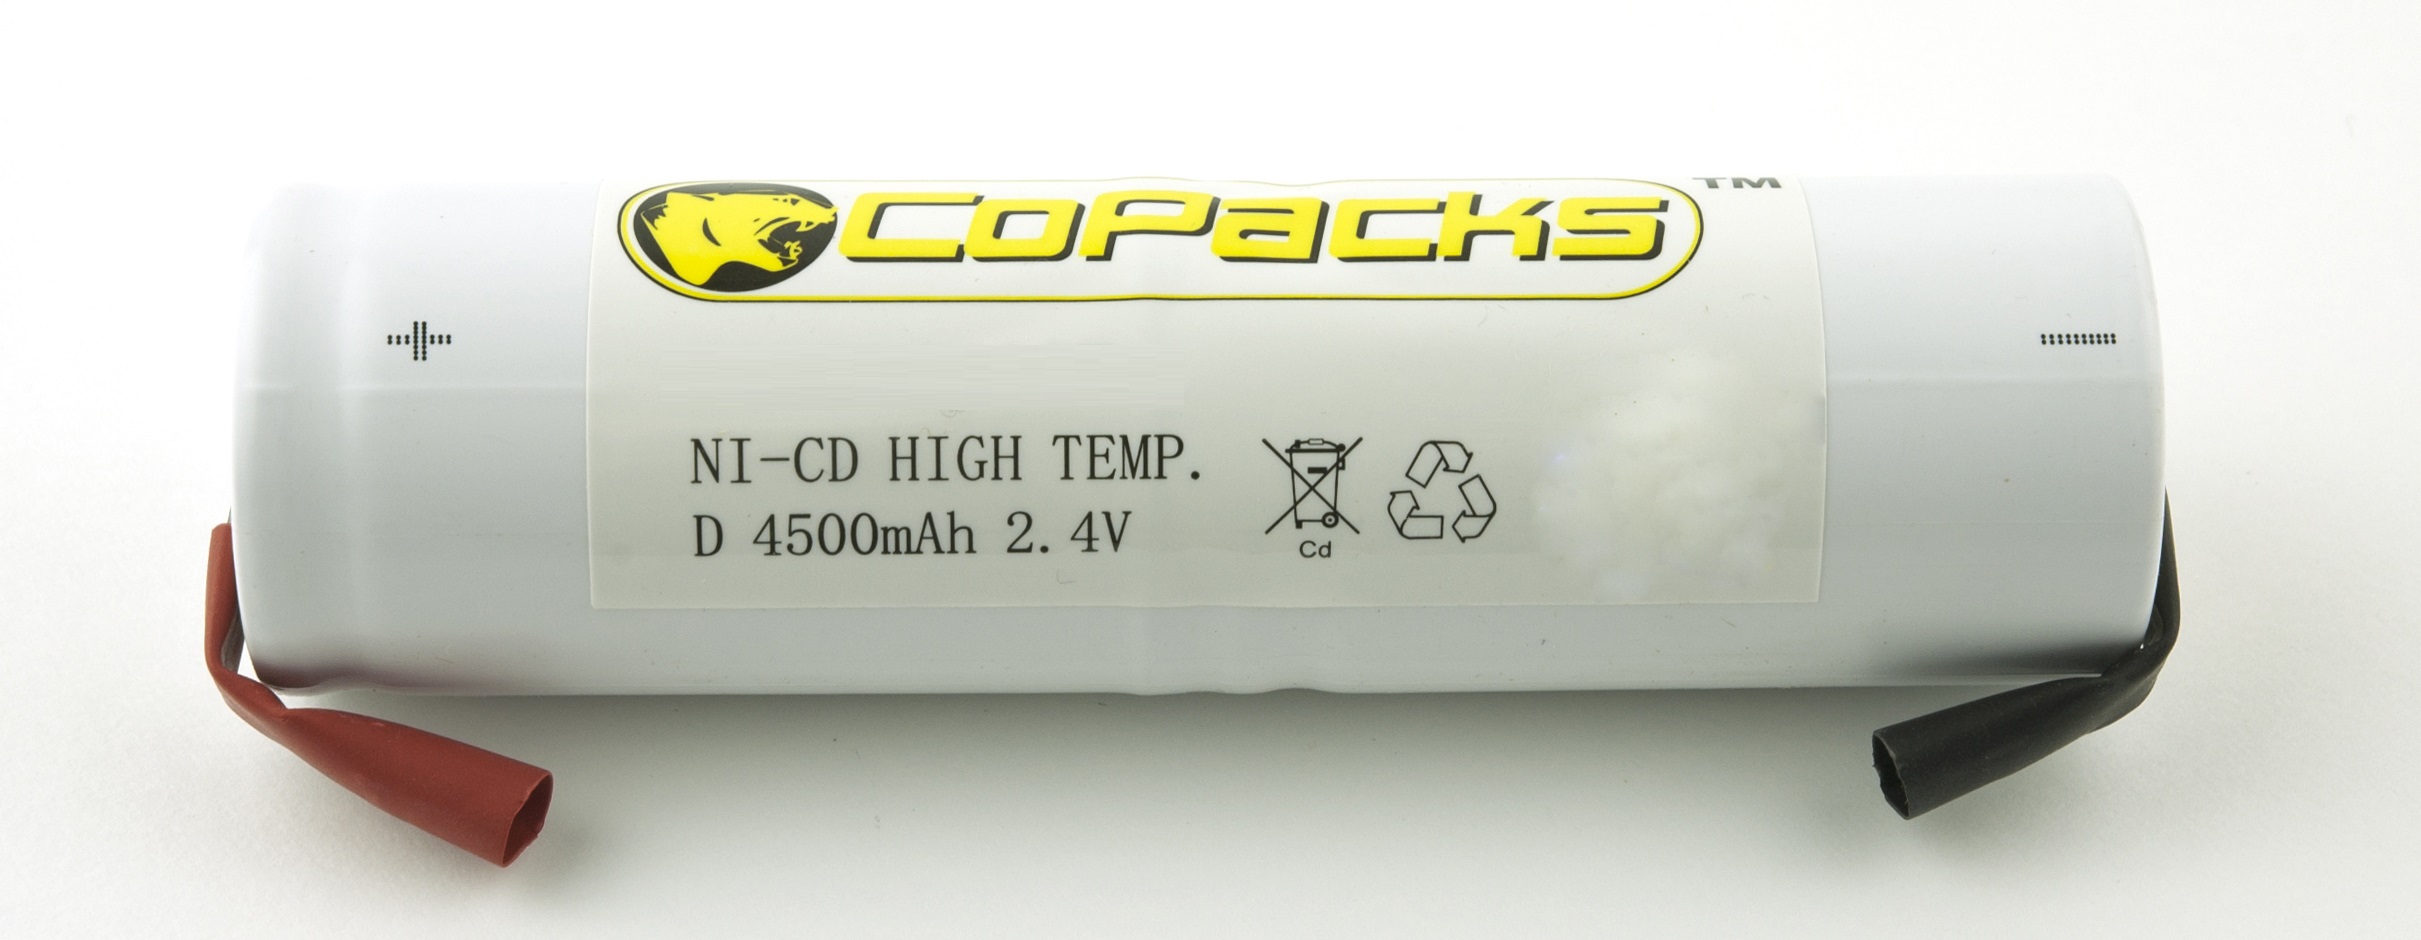 CoPacks NC battery pack emergency light - D-Size